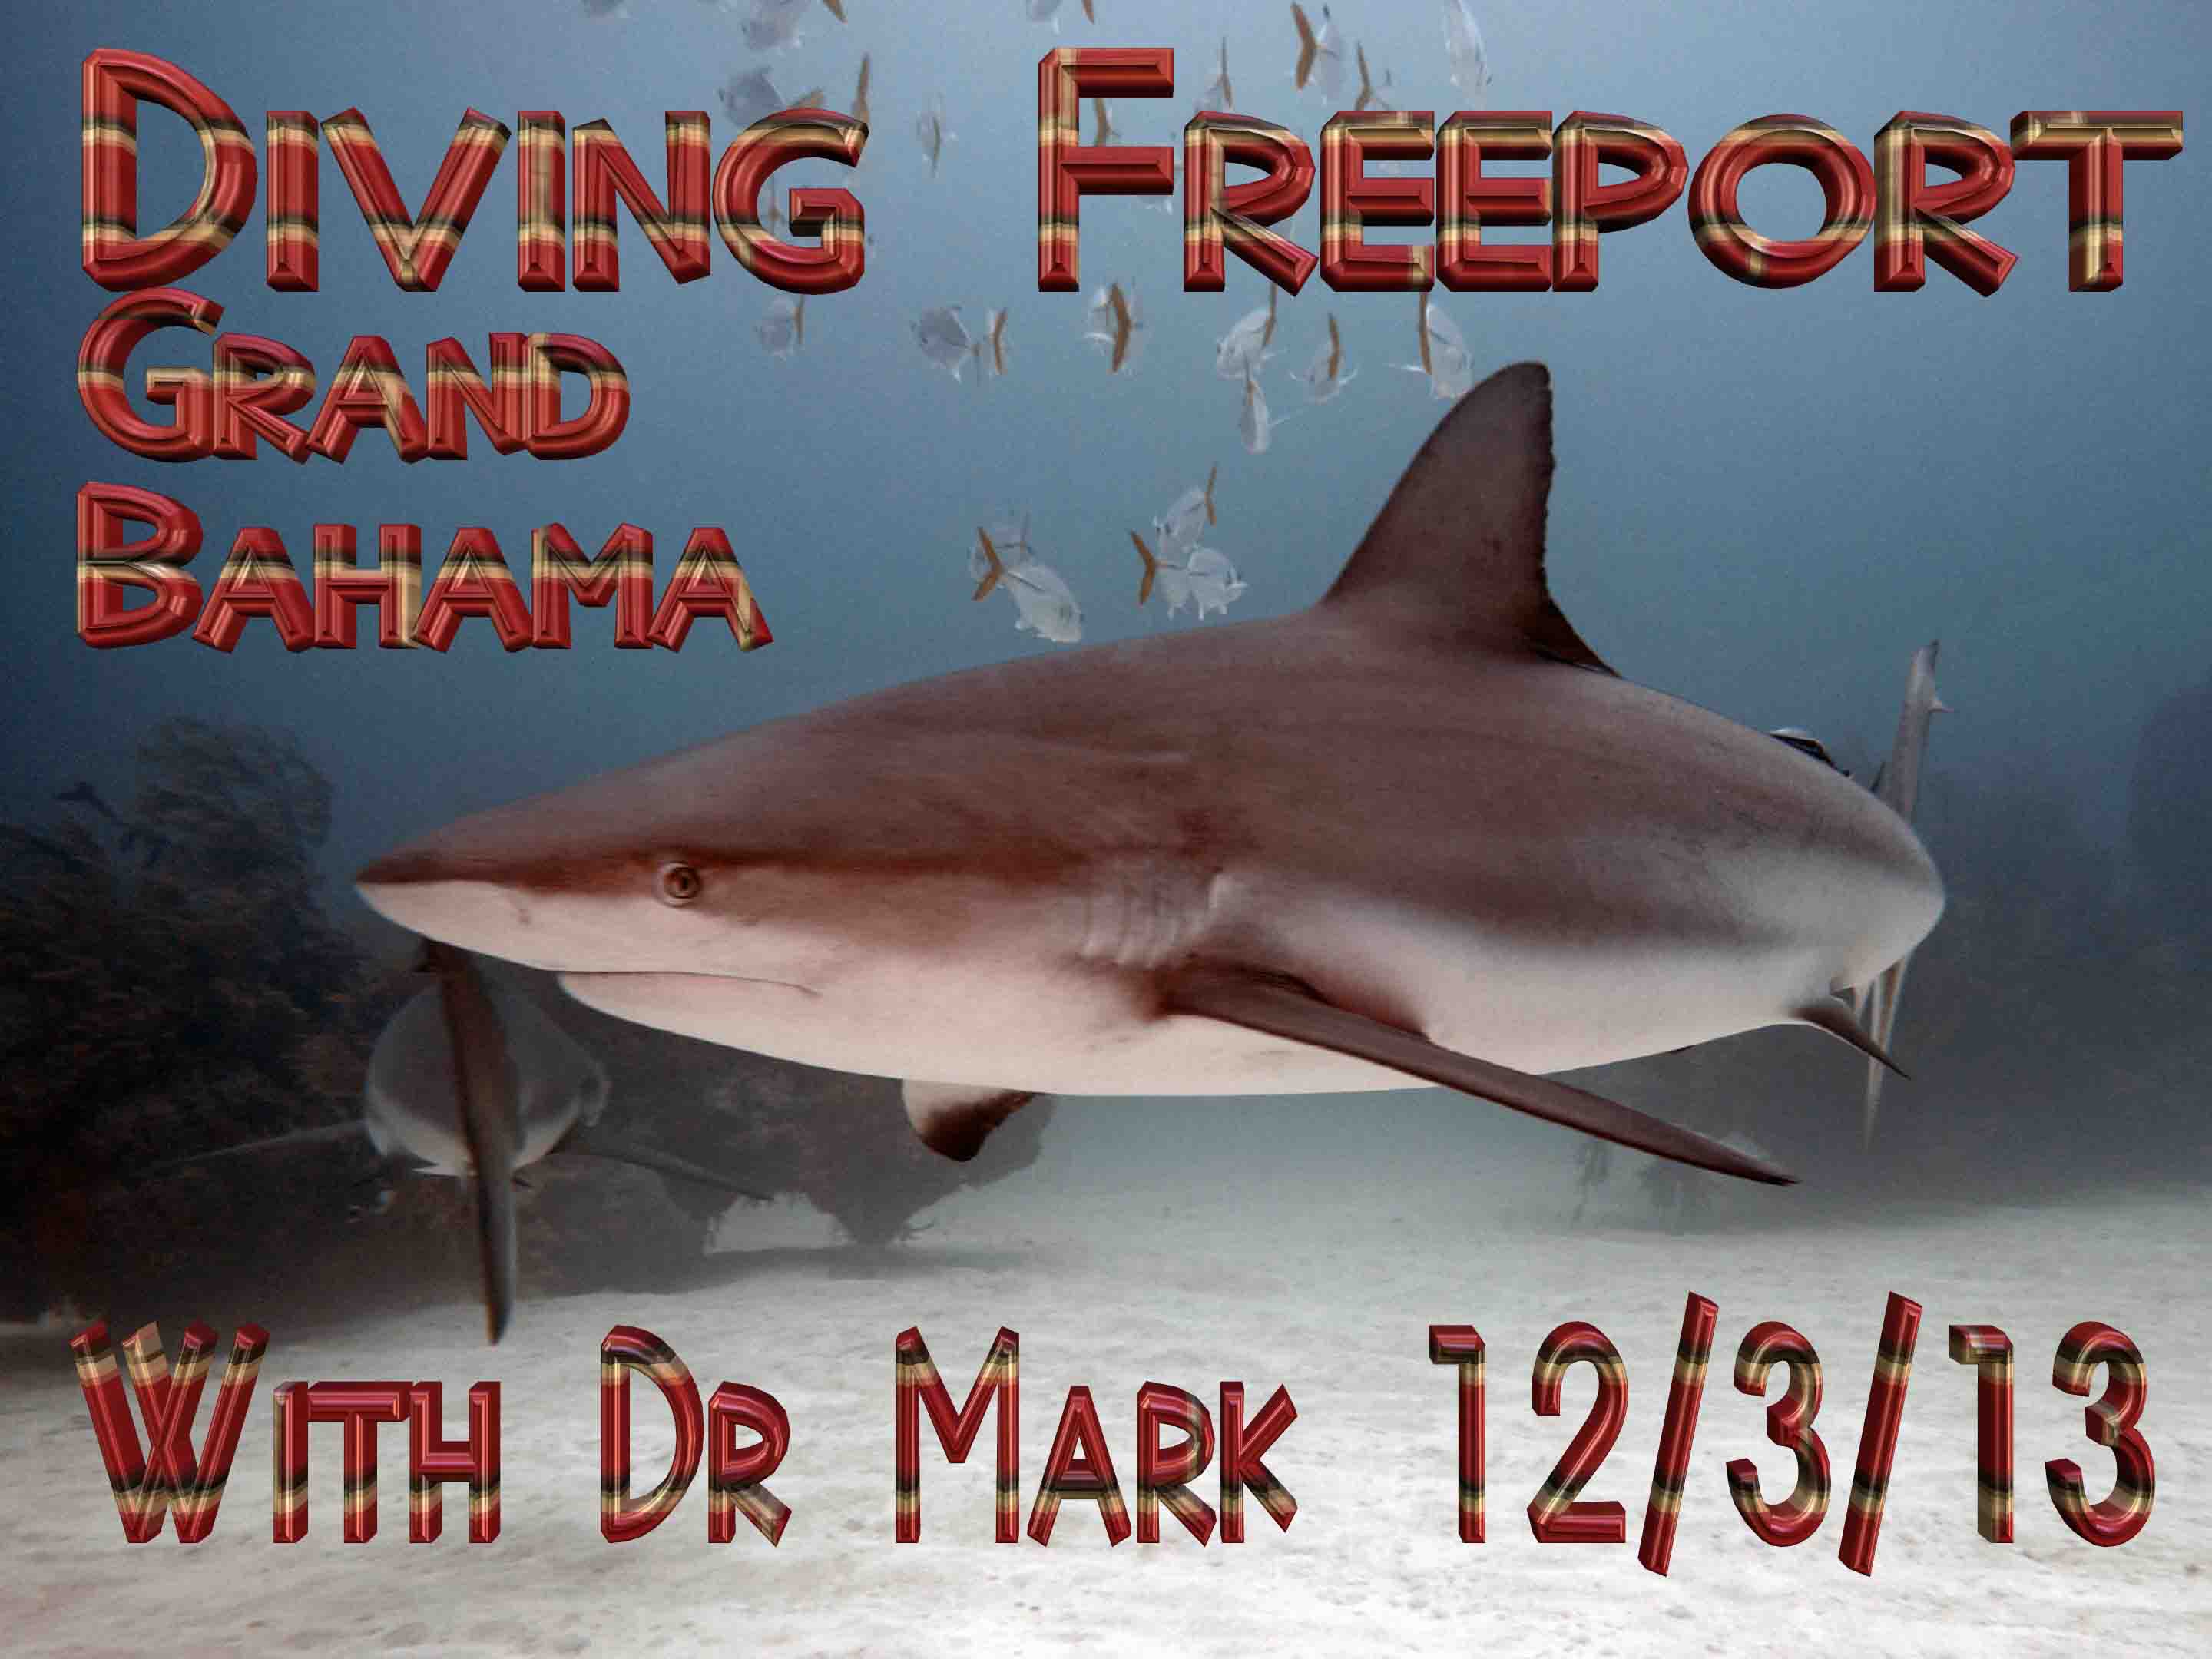 Diving Freeport Grand Bahama
                12-3-13